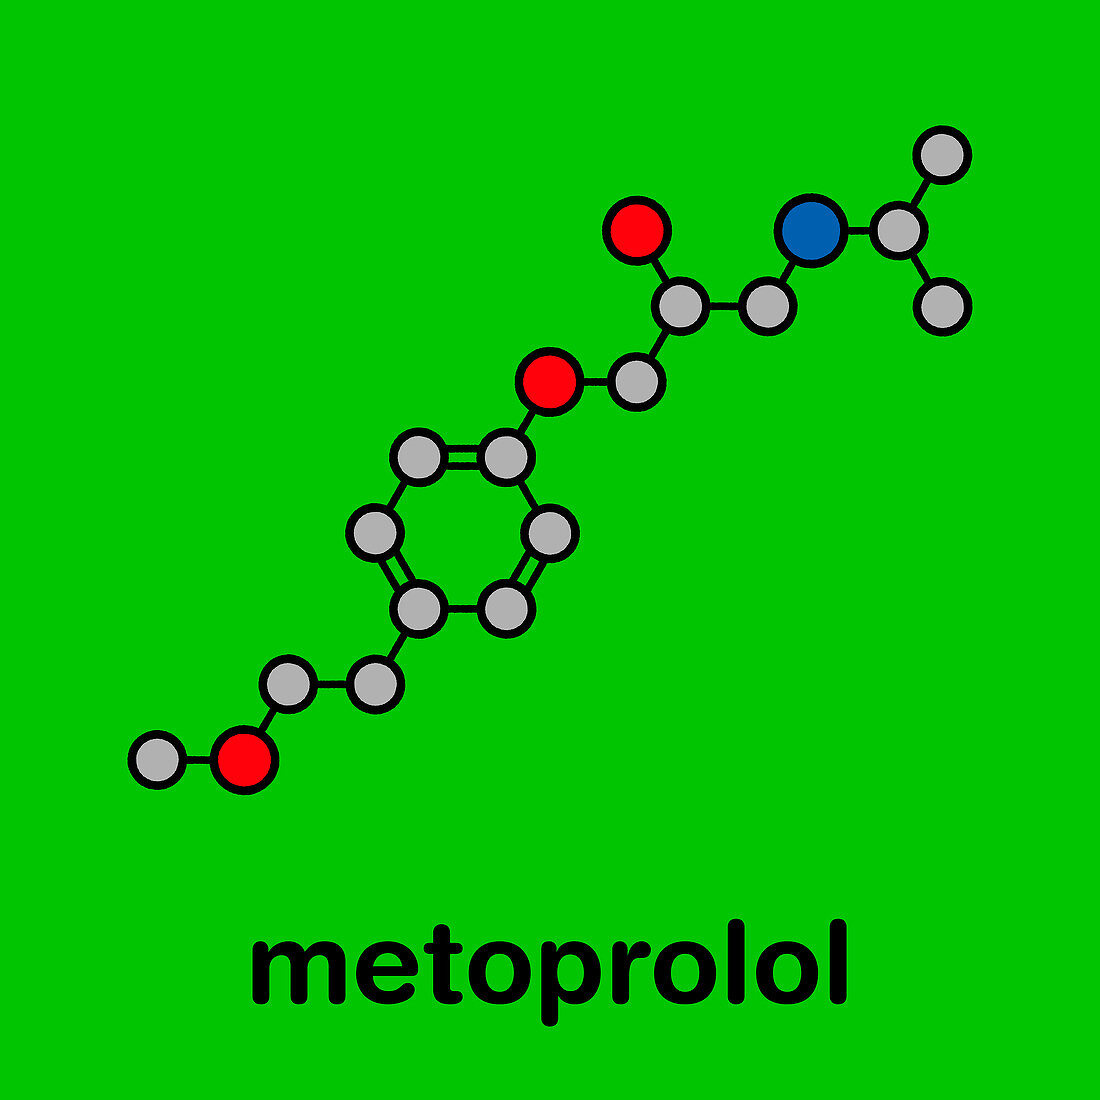 Metoprolol high blood pressure drug, molecular model